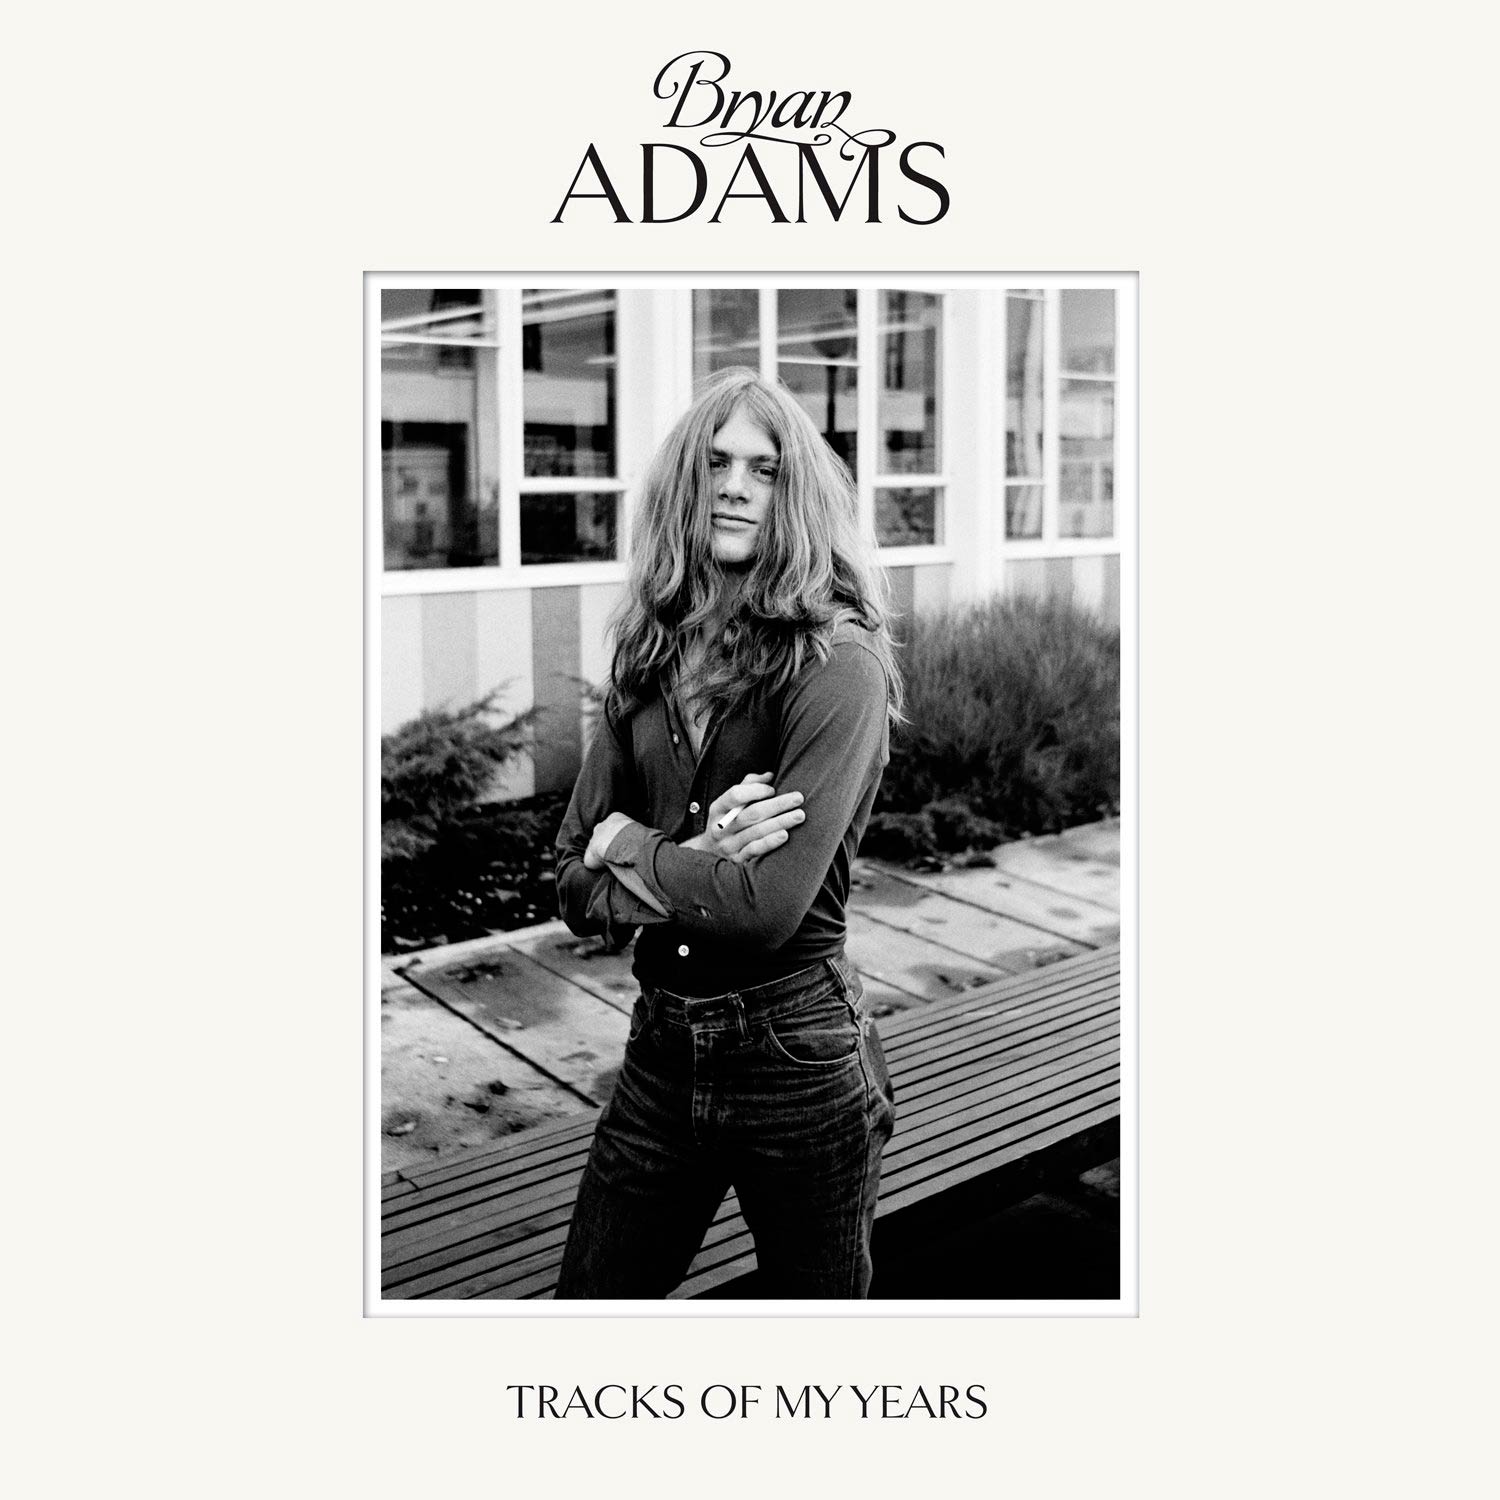 BRYAN ADAMS: Oggi esce il nuovo album  "TRACKS OF MY YEARS"